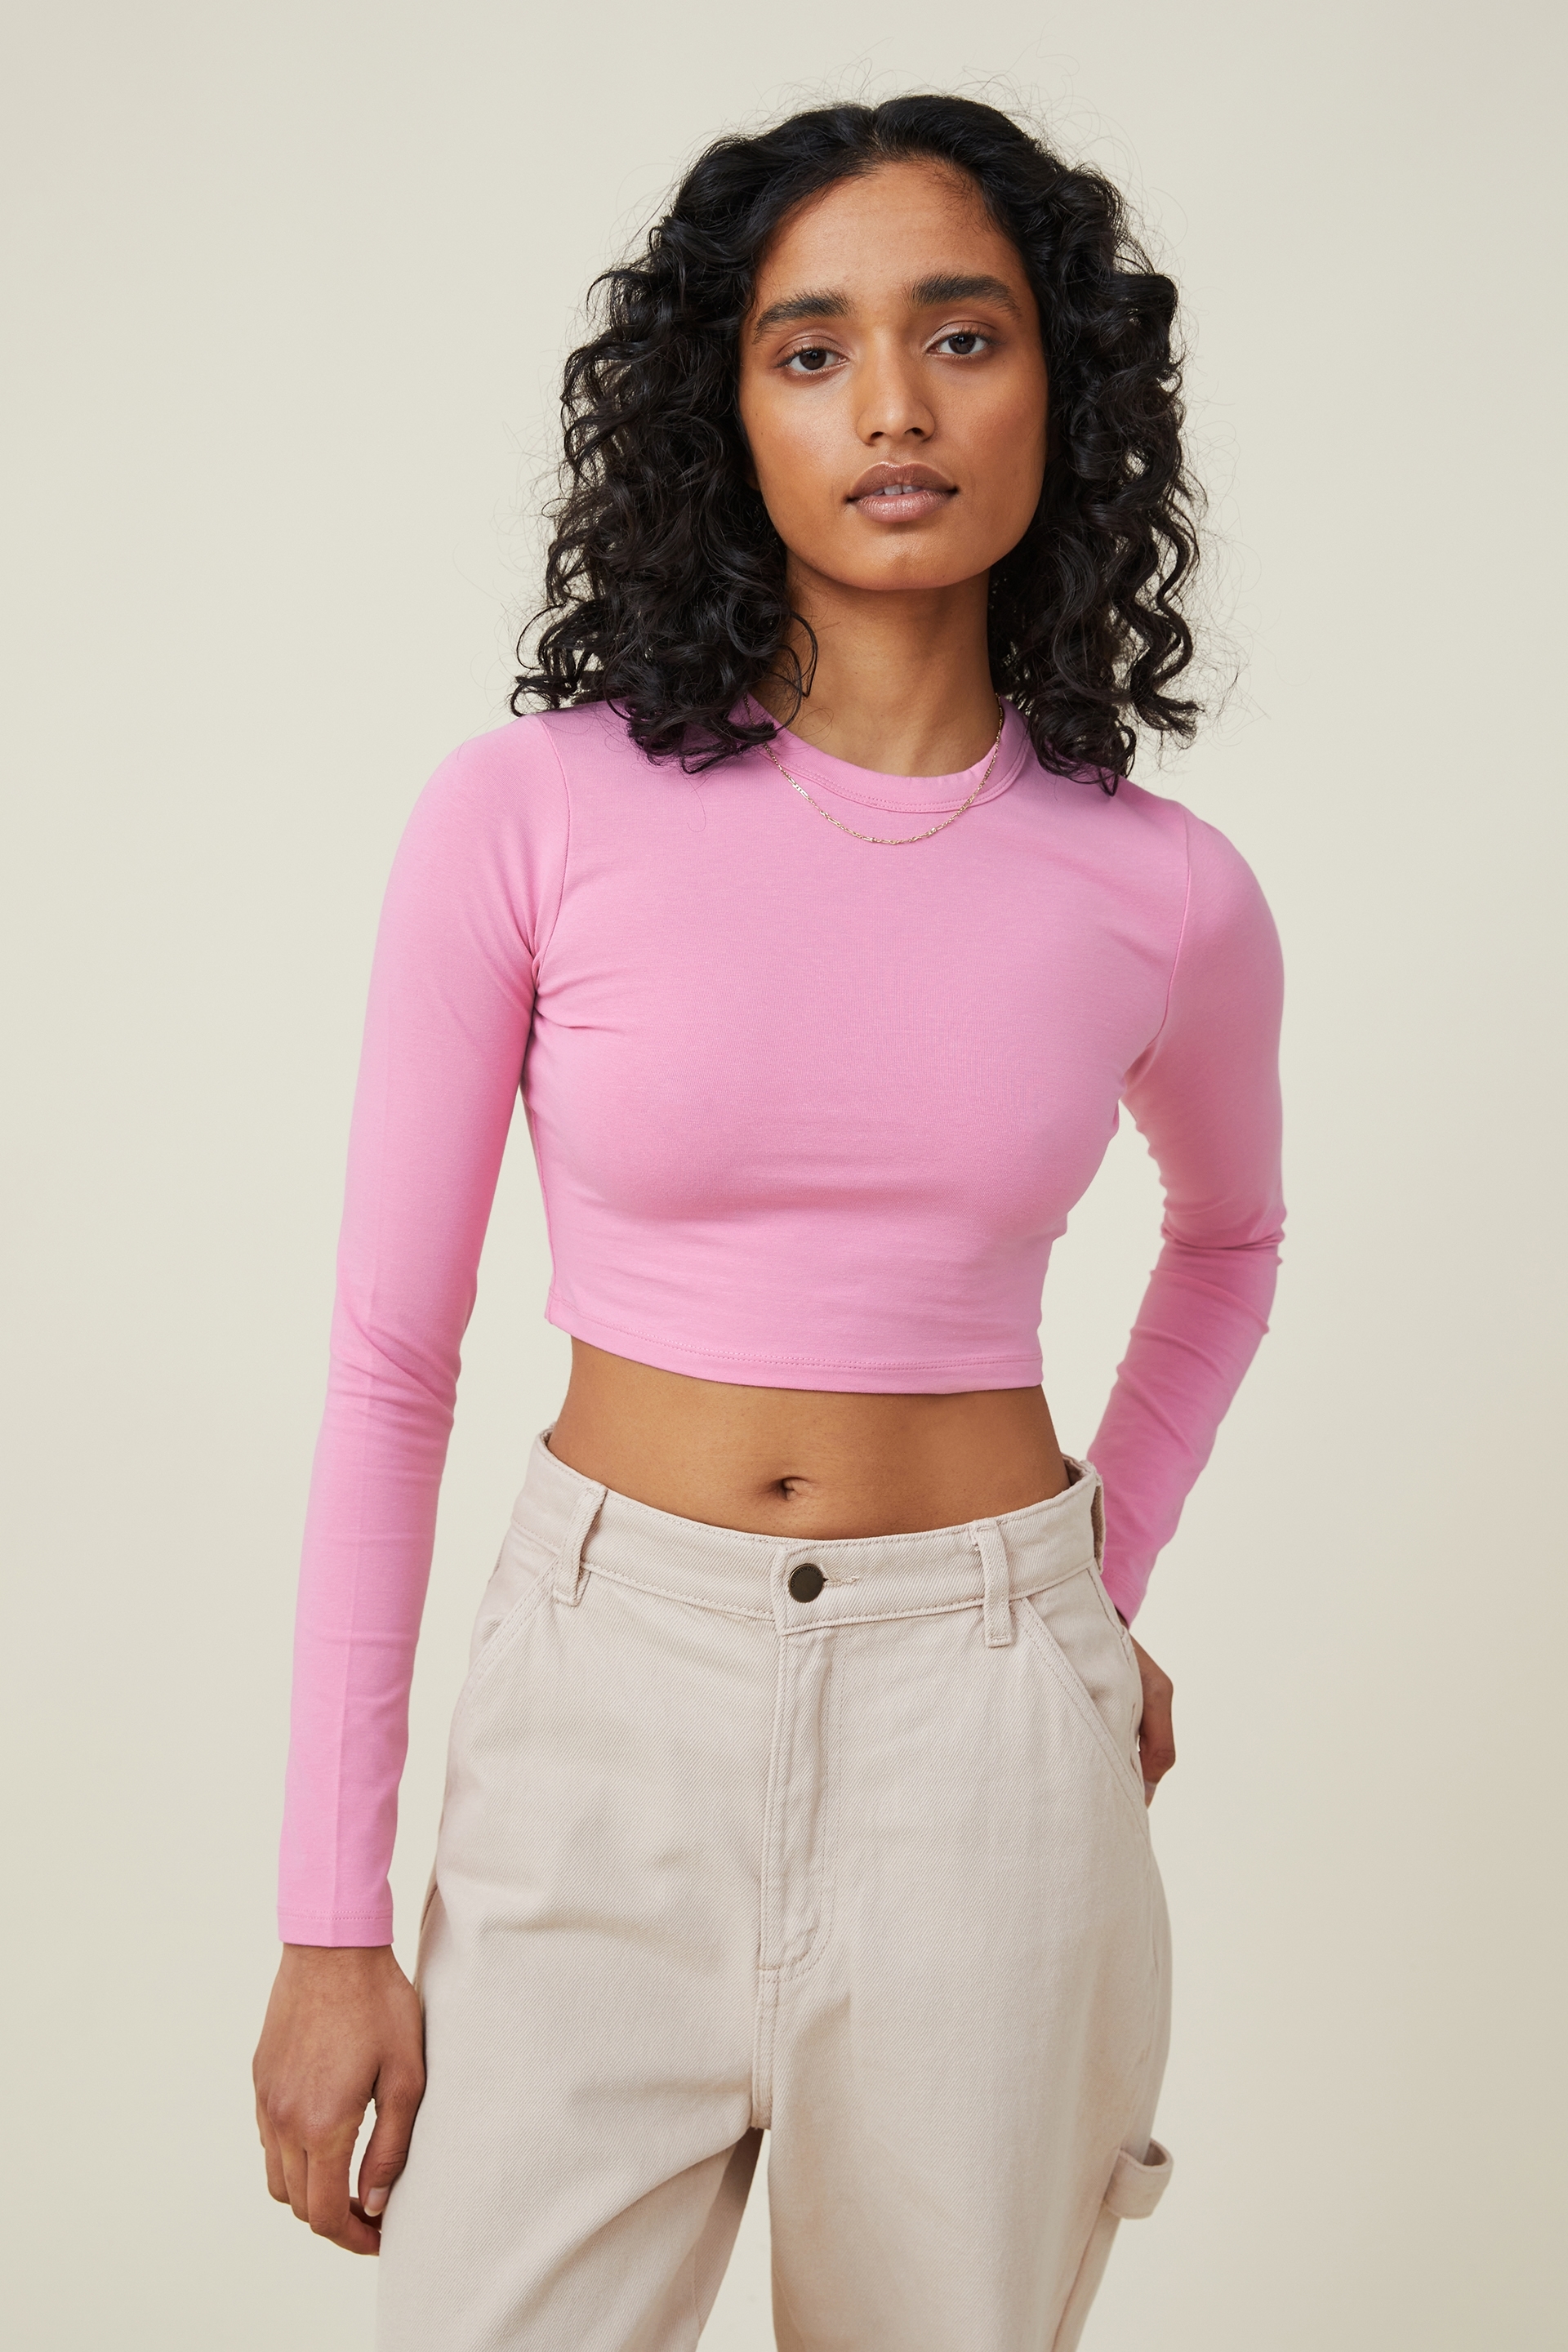 Cotton On Women - Micro Crop Long Sleeve Top - Joy pink